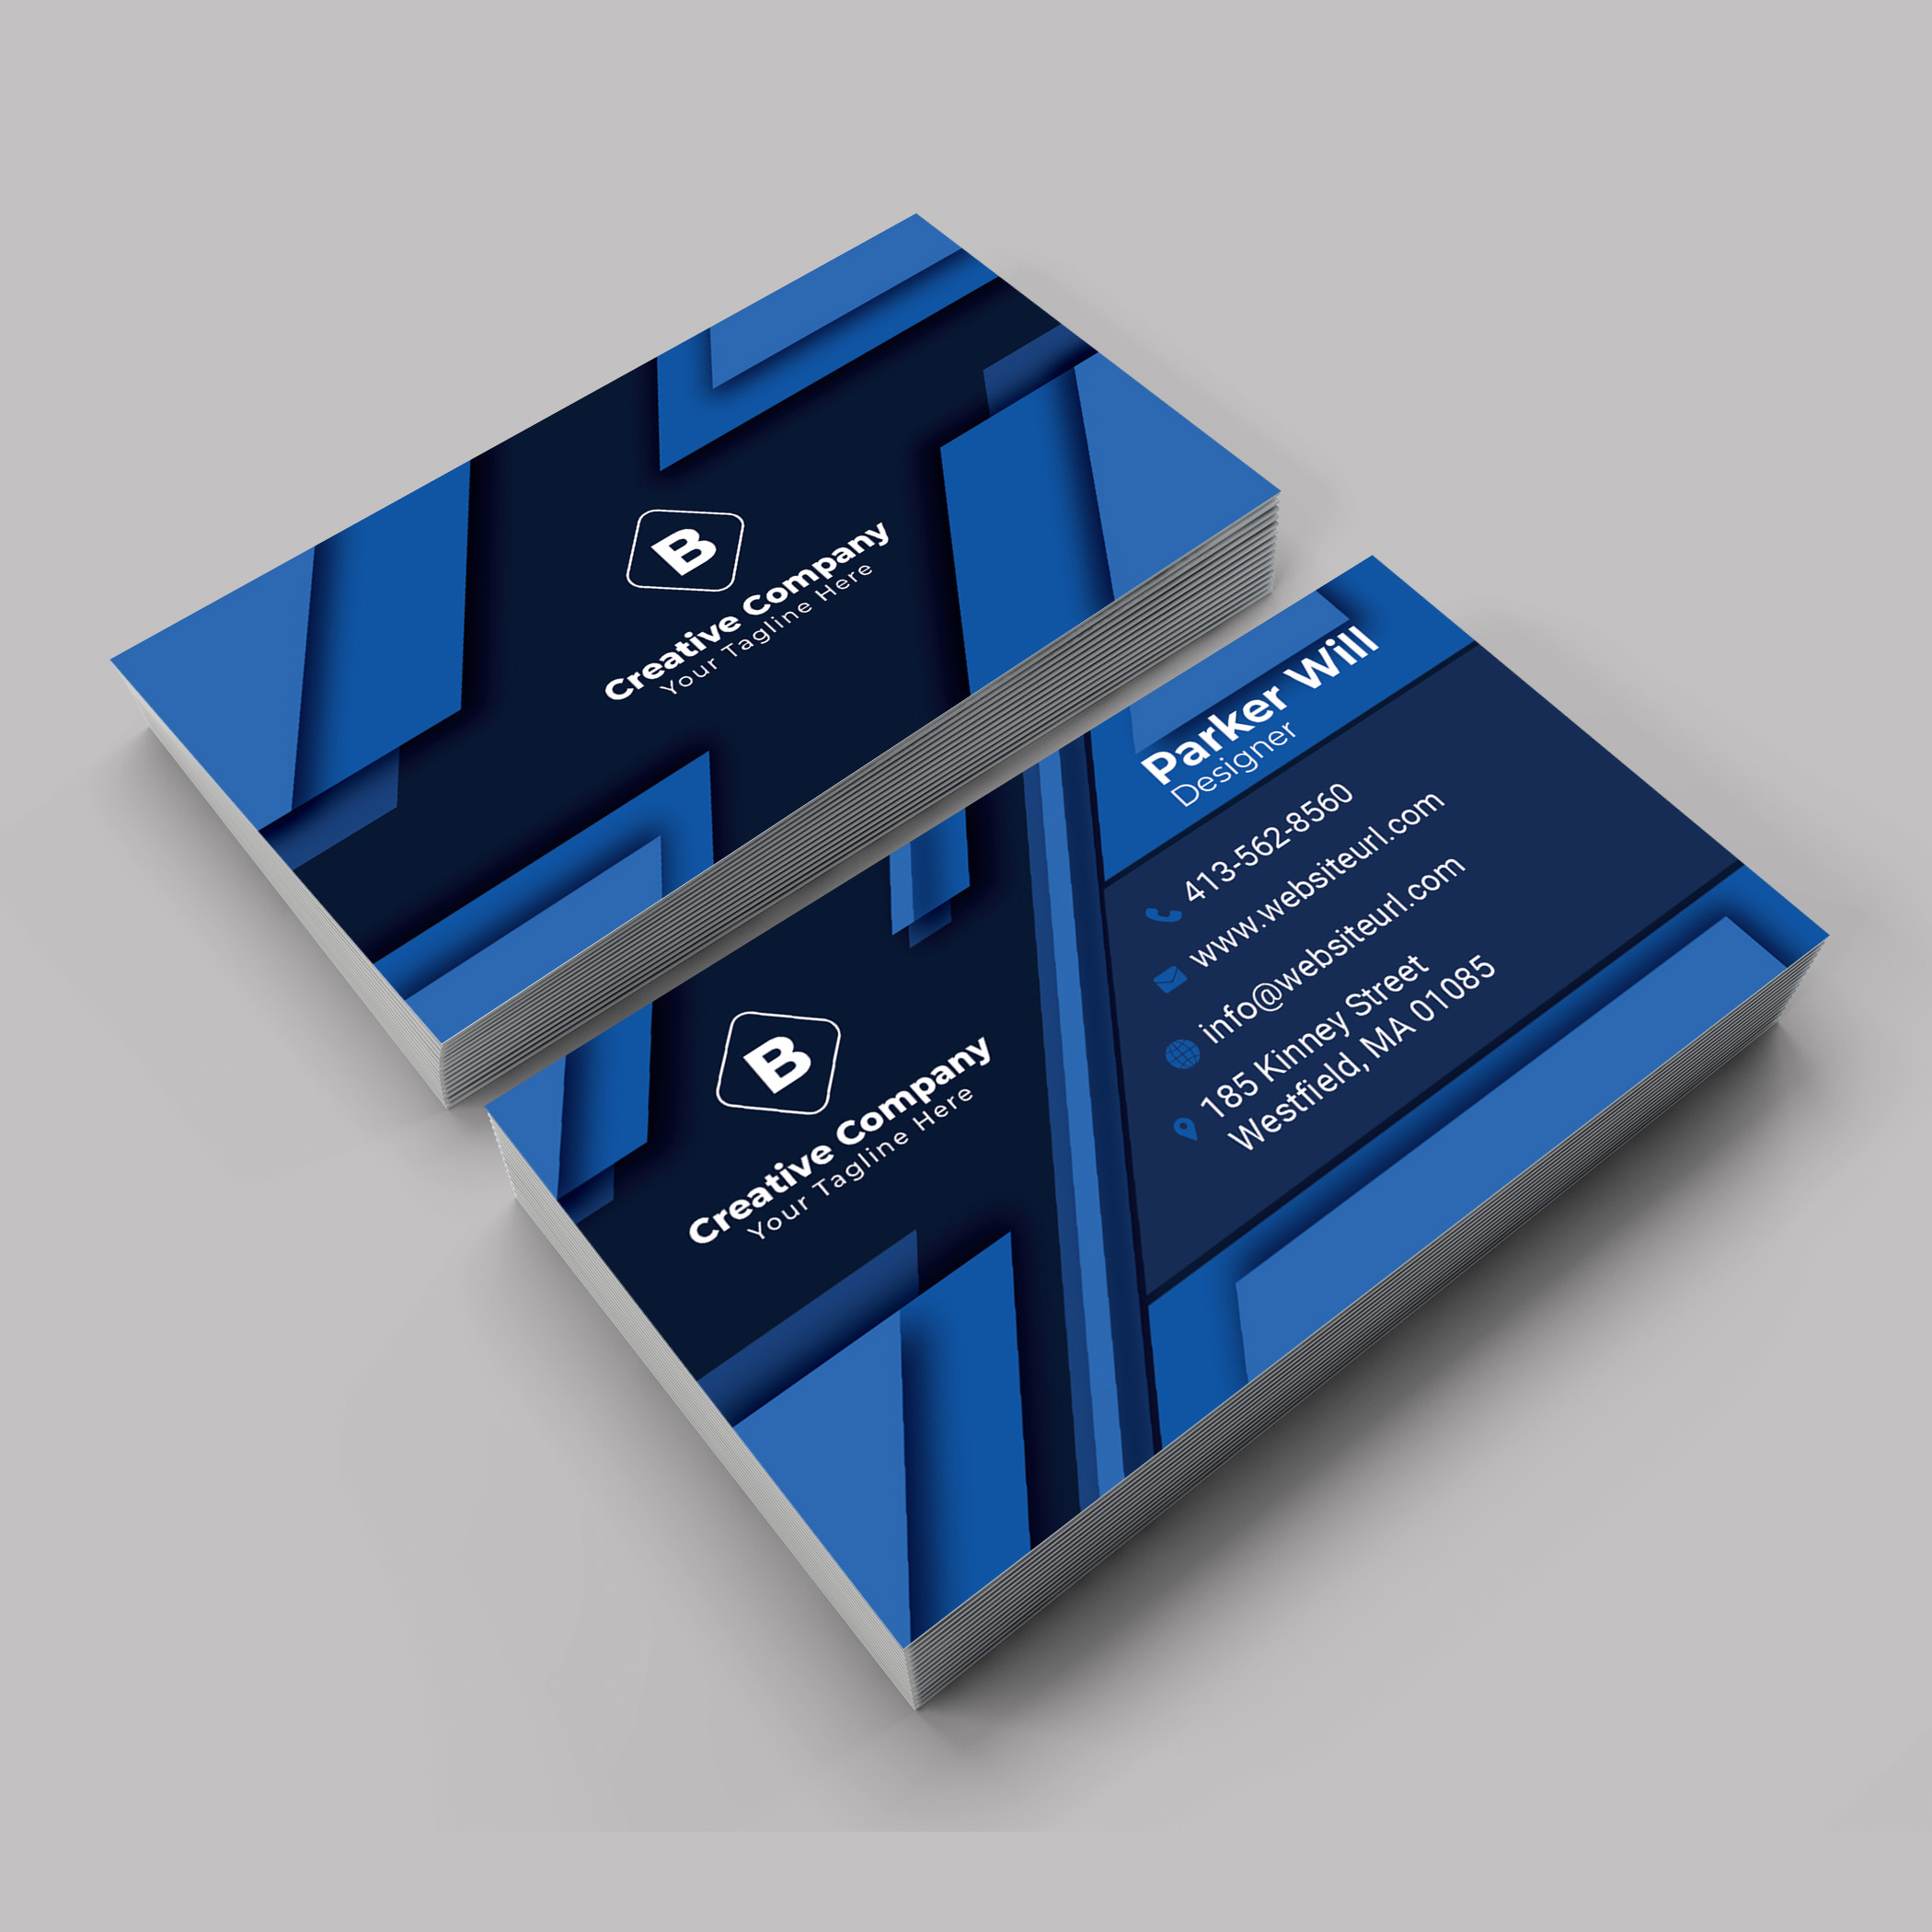 4 Corporate Business Cards Bundle, cards with blue design.